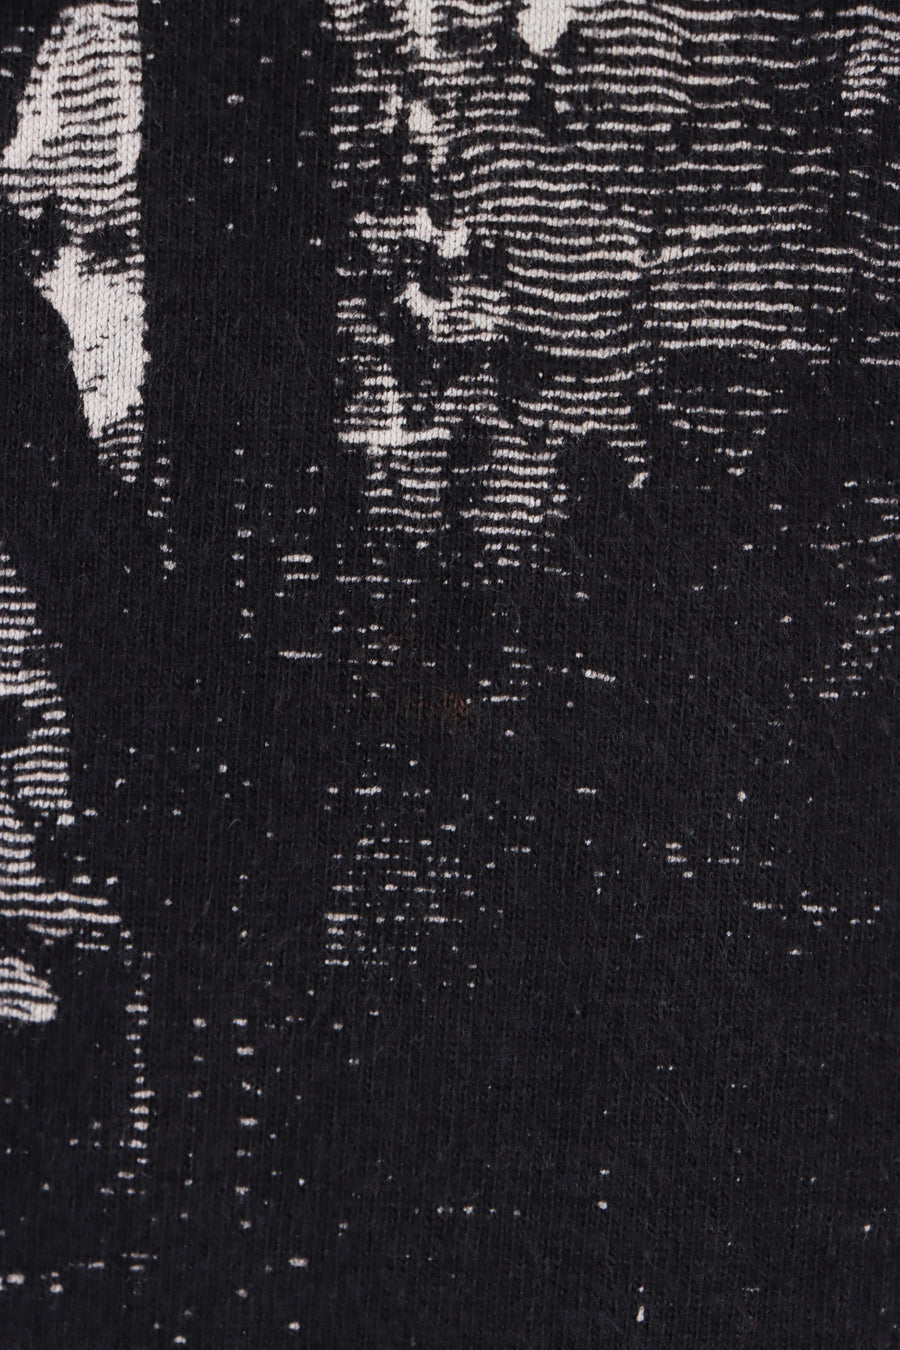 Vintage Jesus Gustave Dore Crucifixion Single Stitch T-Shirt USA Made (M-L)